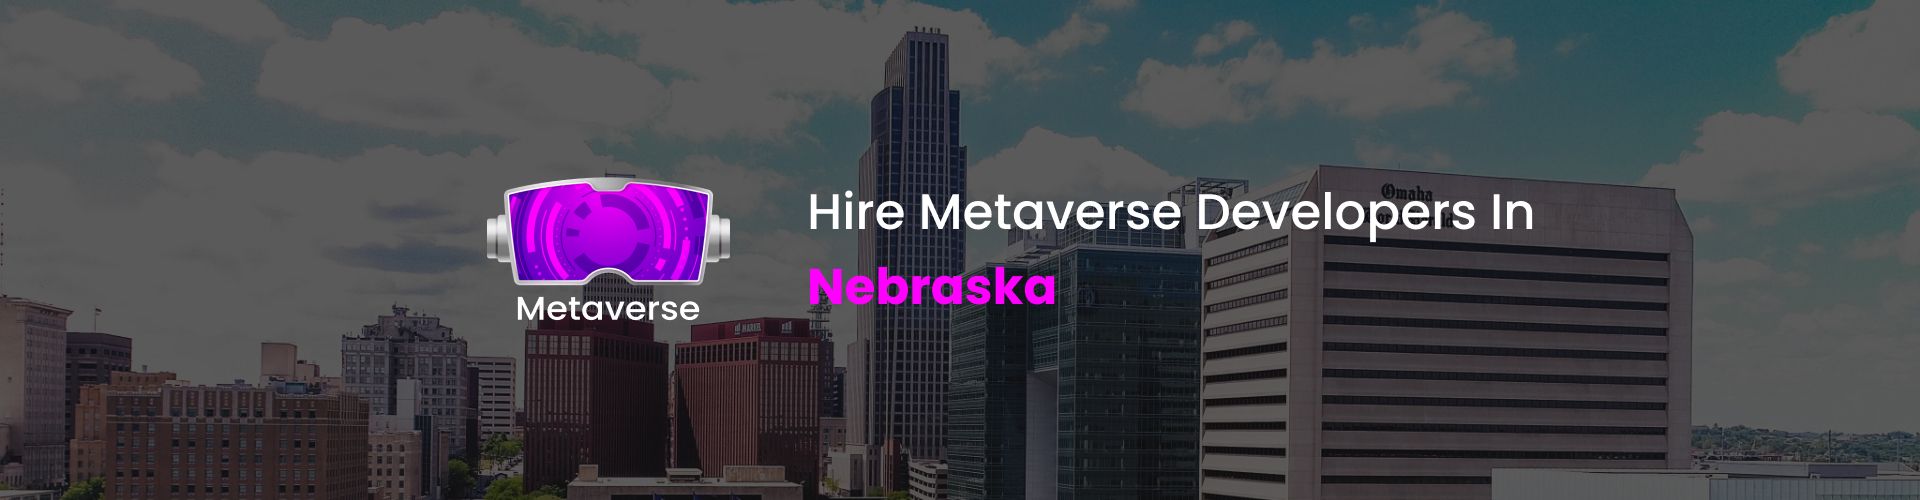 hire metaverse developers in nebraska